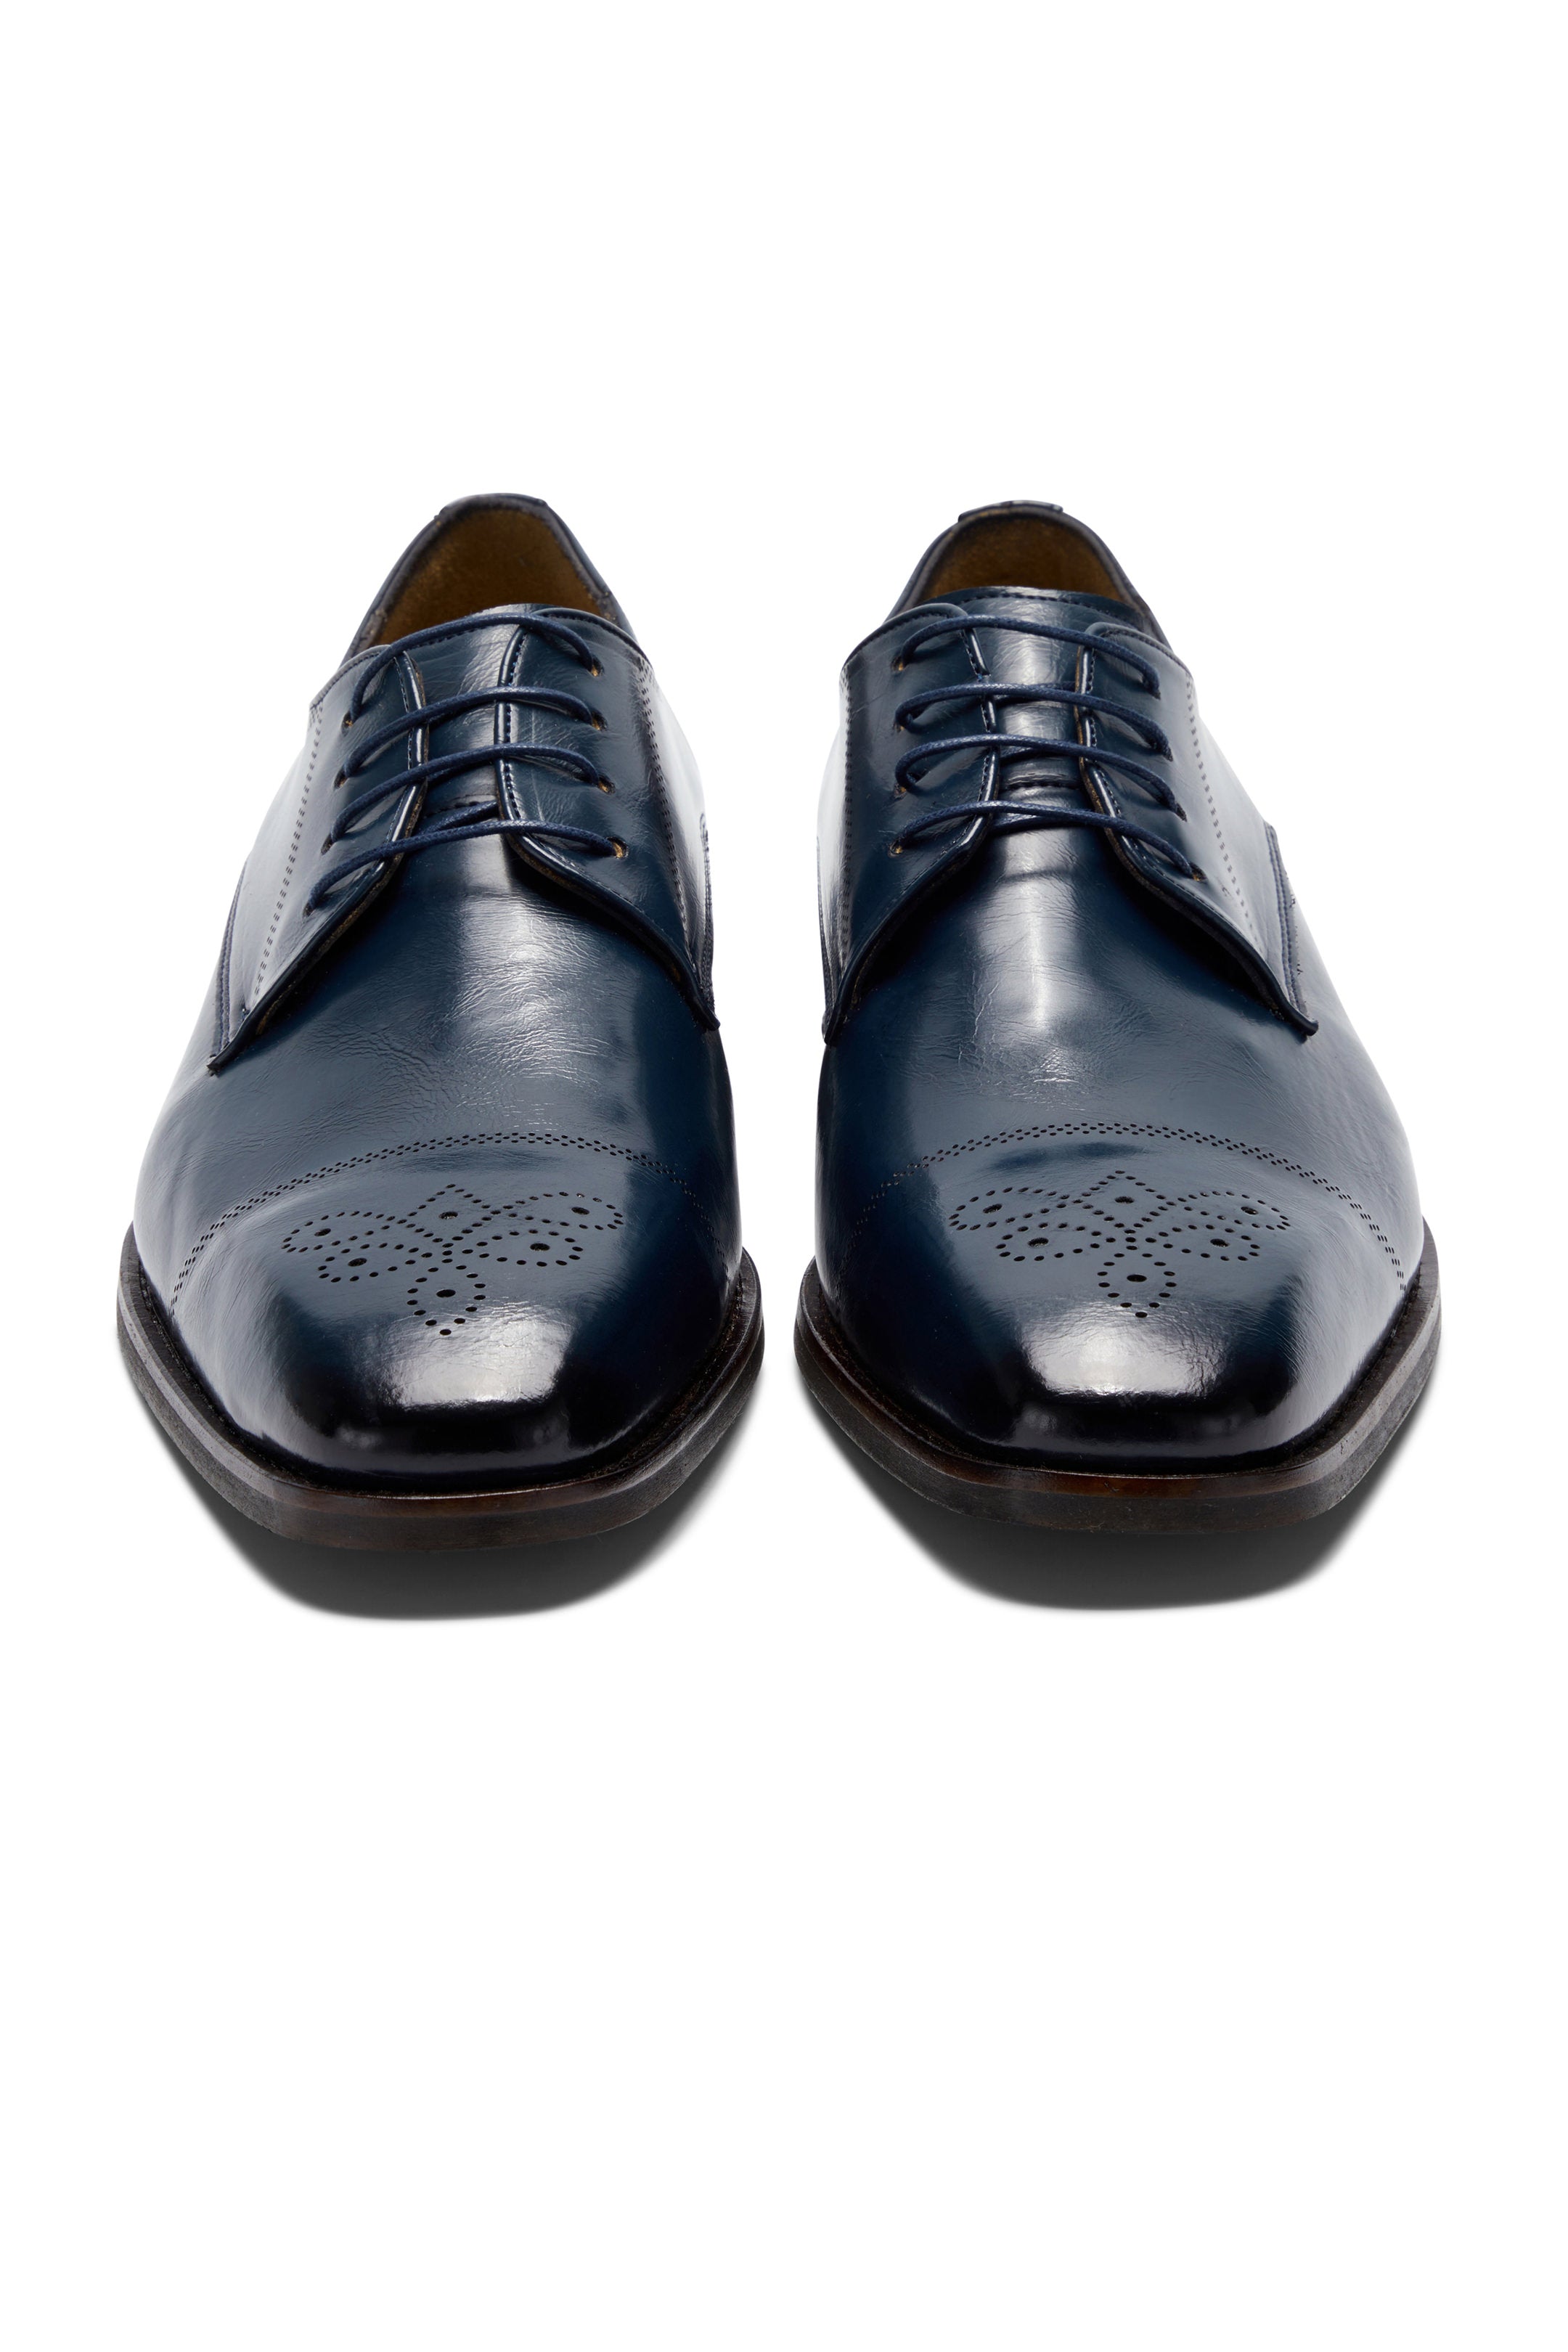 Buy LOUIS STITCH Men's Style Blue/Black Formal Brogues Shoes